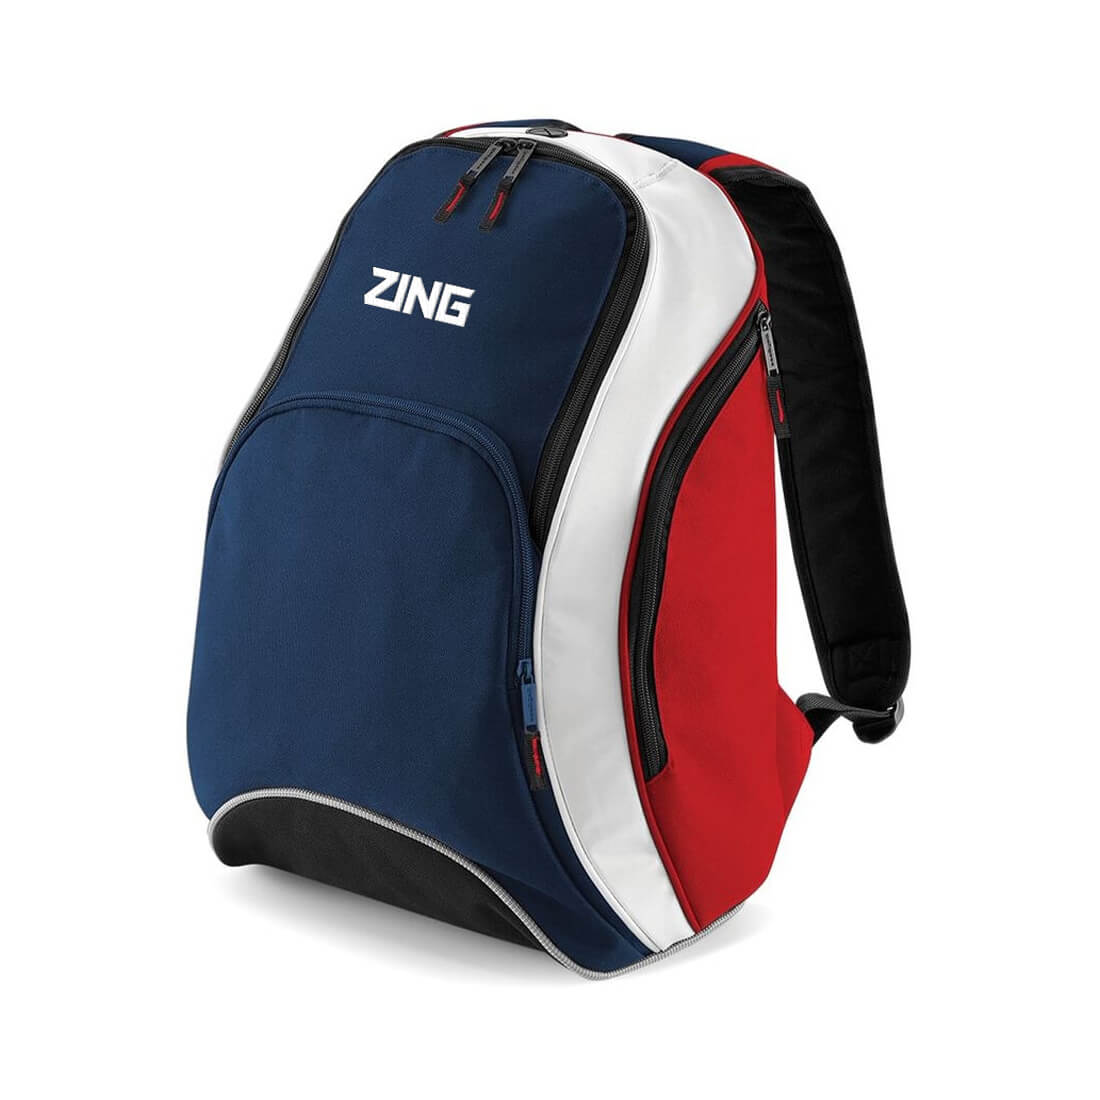 ZING Sportswear Rucksack | Training Kit and Teamwear – ZING - Navy and Red